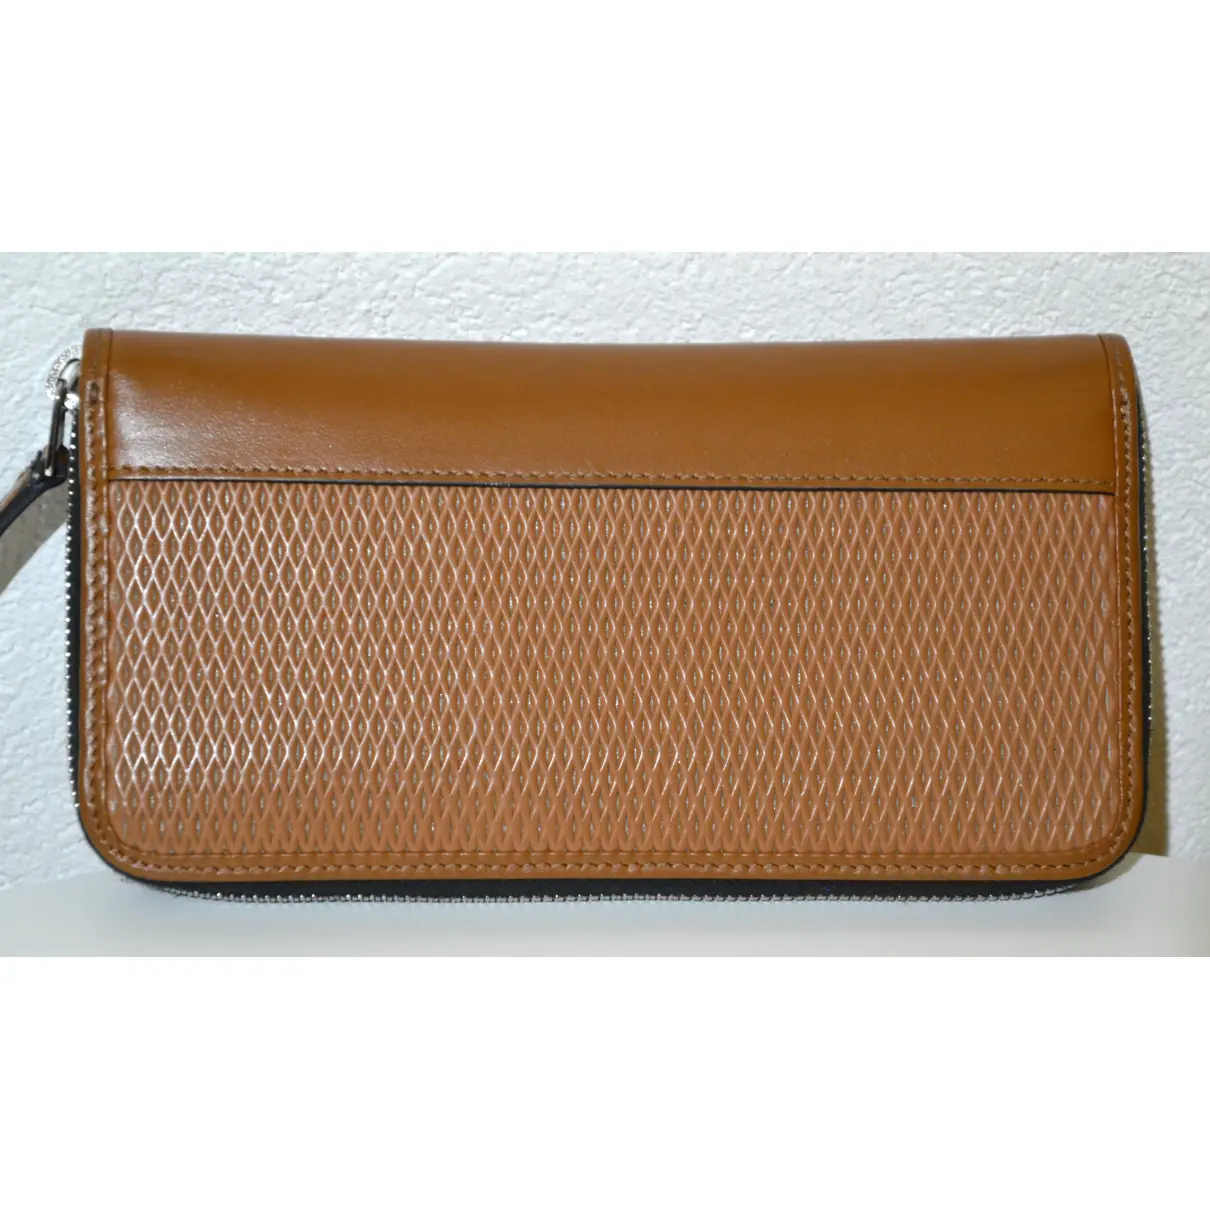 Buy Hogan Leather wallet online